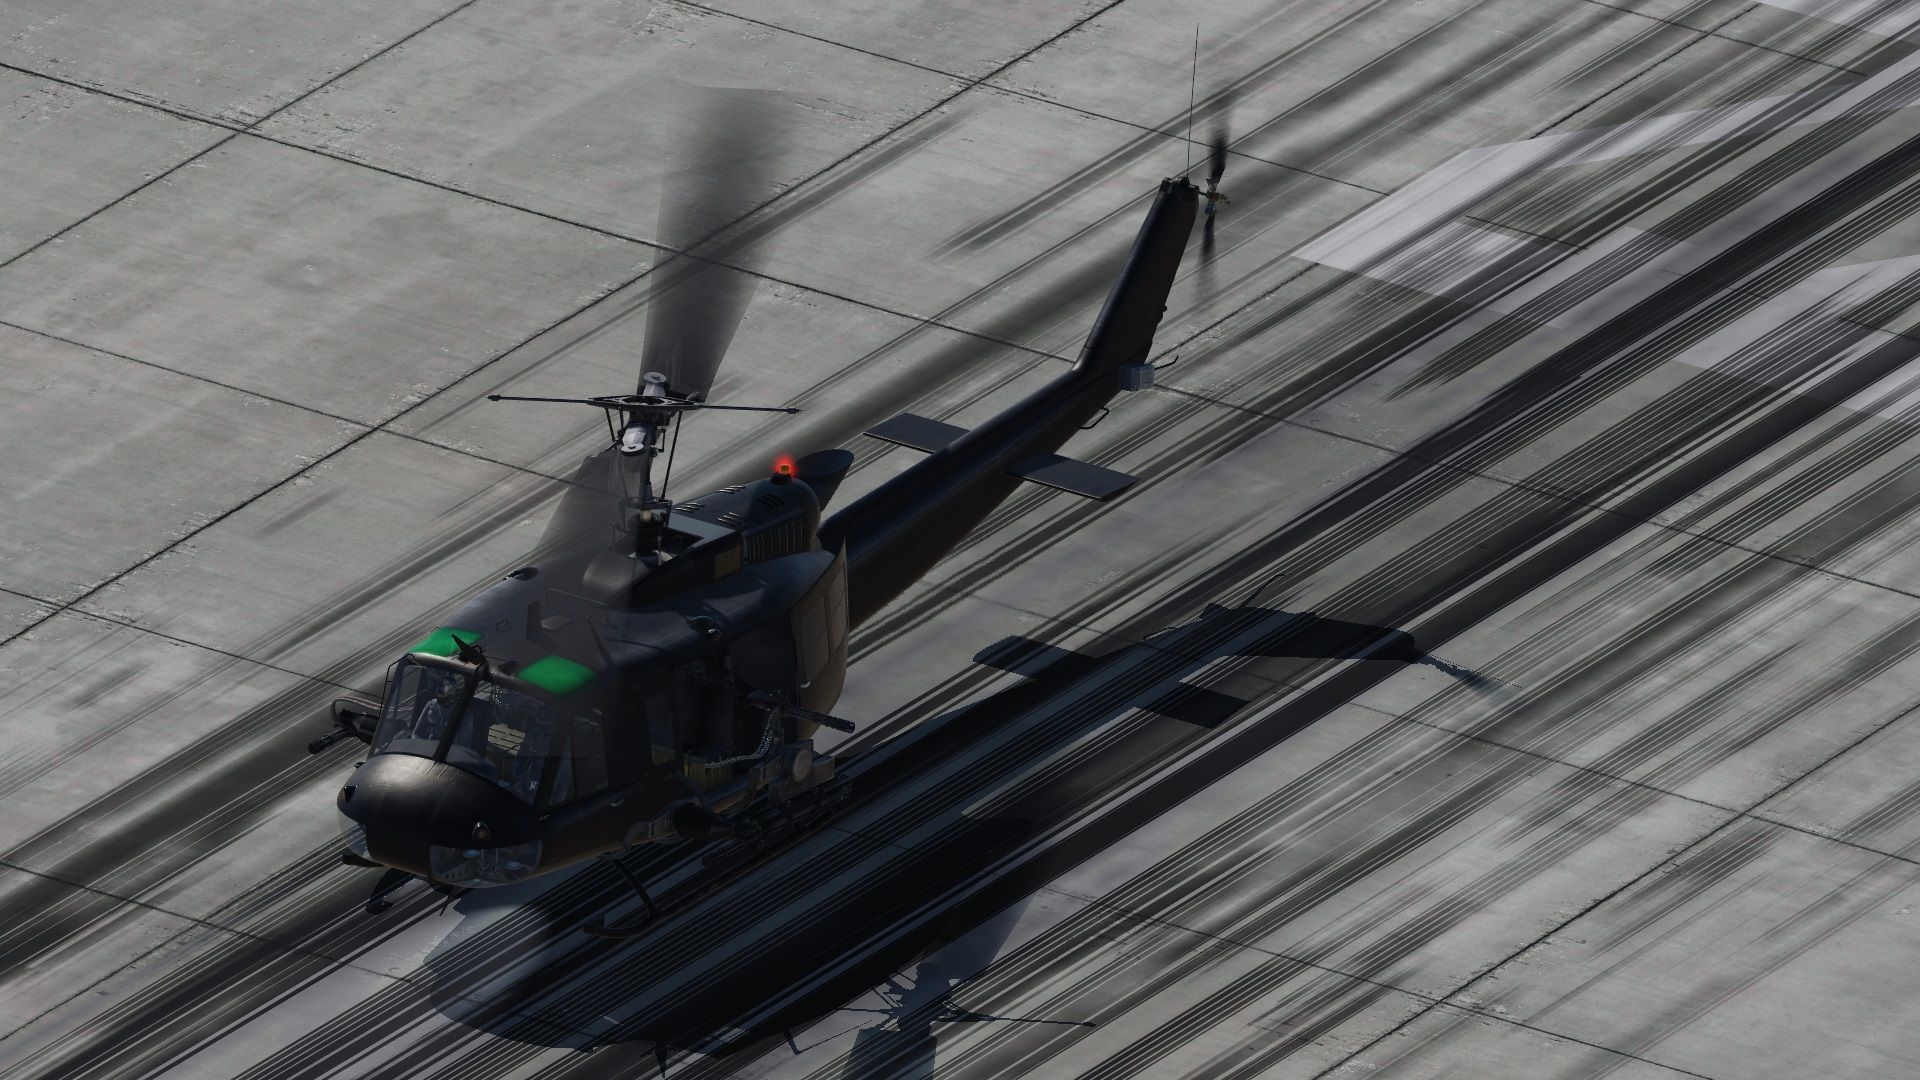 F.B.I Black Helicopter